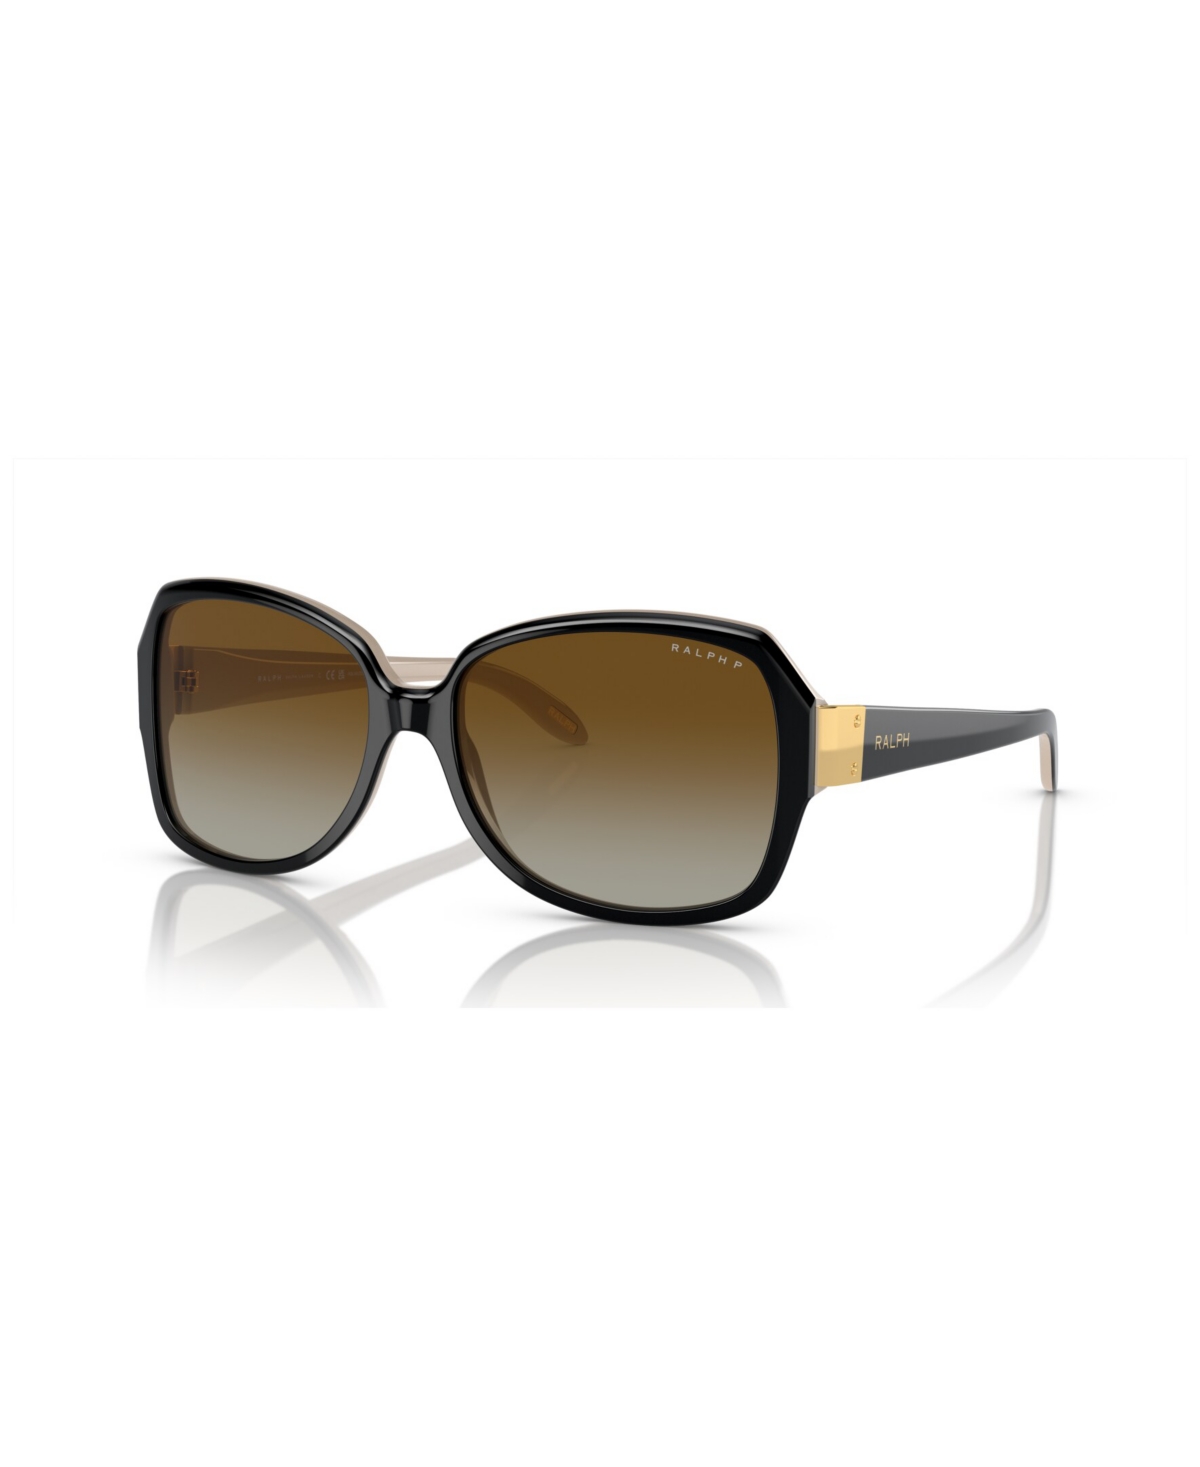 Women's Polarized Sunglasses, Gradient Polar RA5138 - Shiny Black On Nude